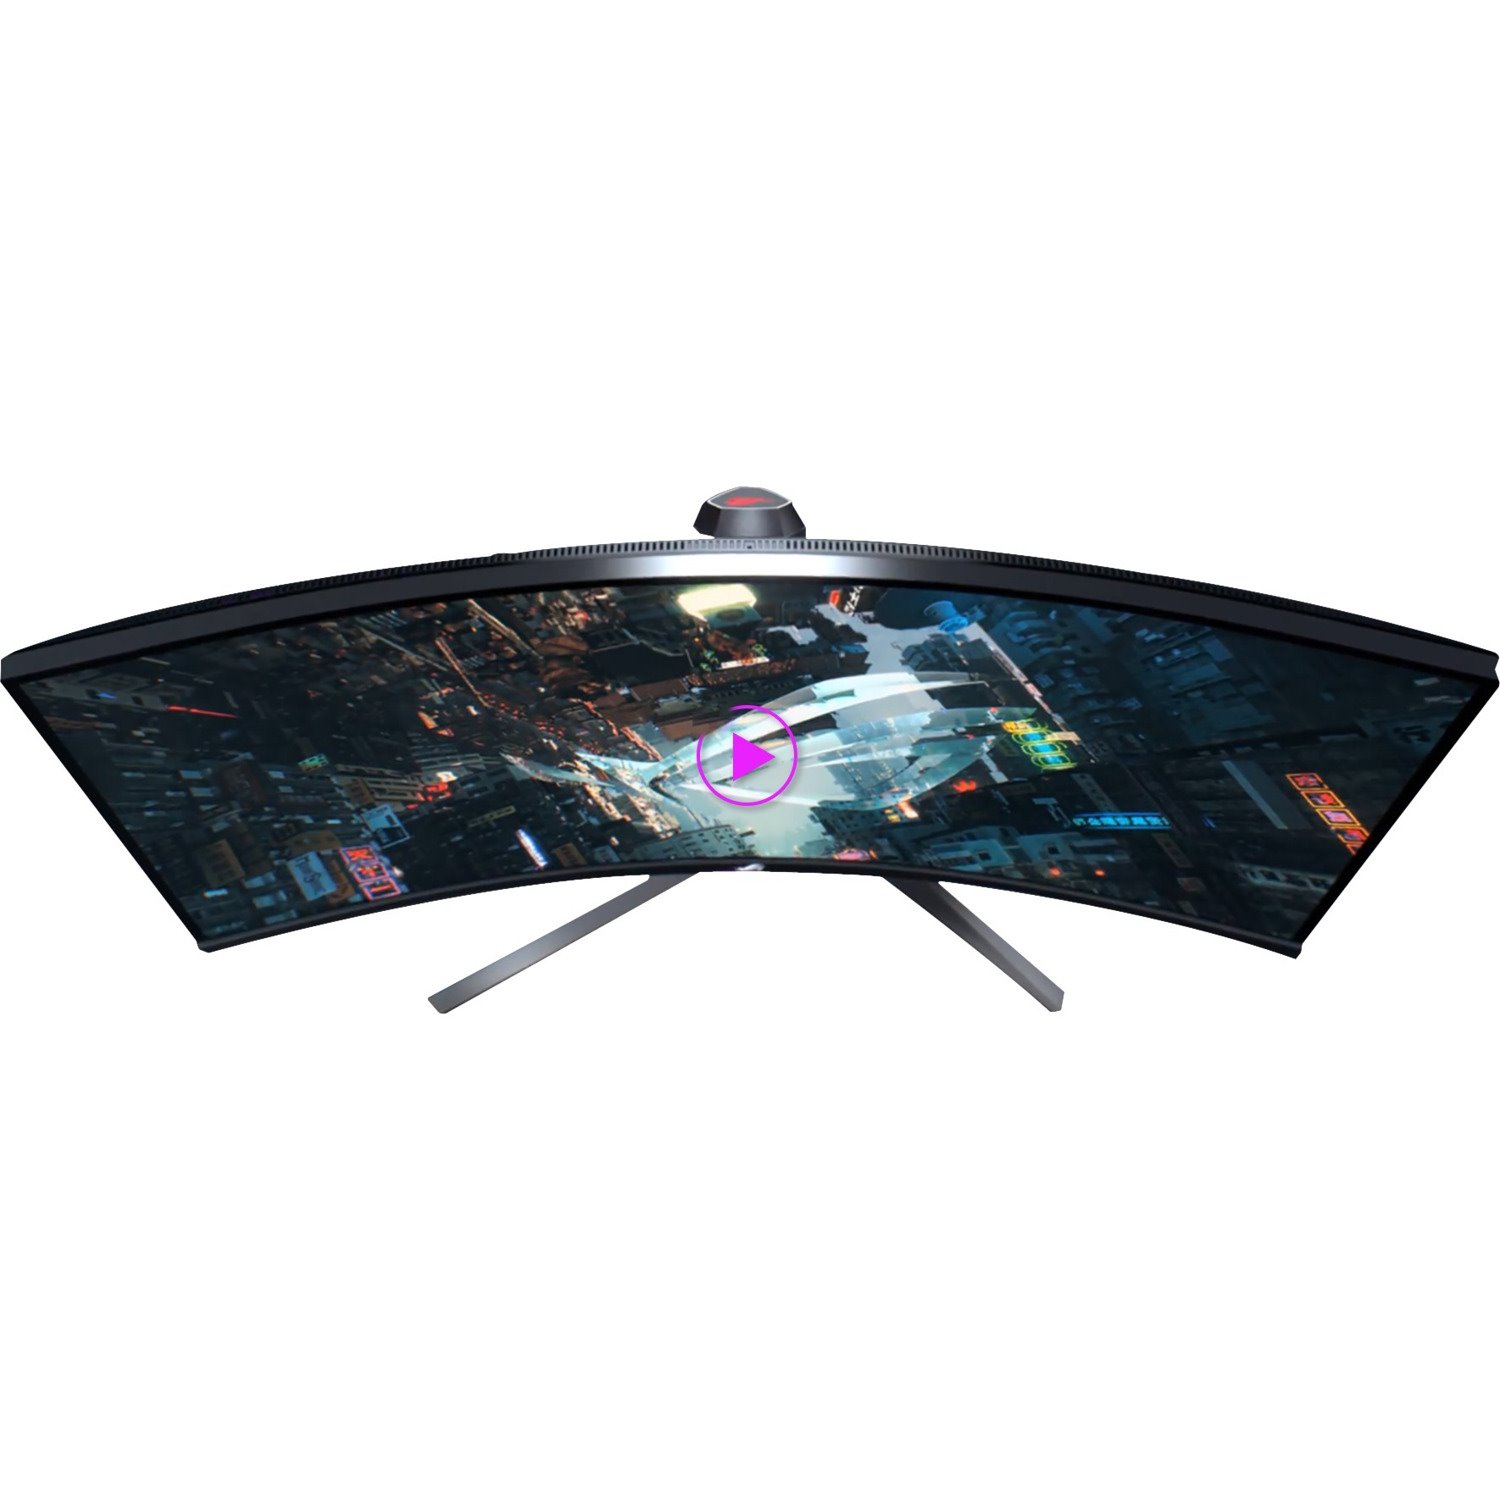 Asus ROG Swift PG35VQ 35" UW-QHD Curved Screen LED Gaming LCD Monitor - 21:9 - Plasma Copper, Armor Titanium, Black